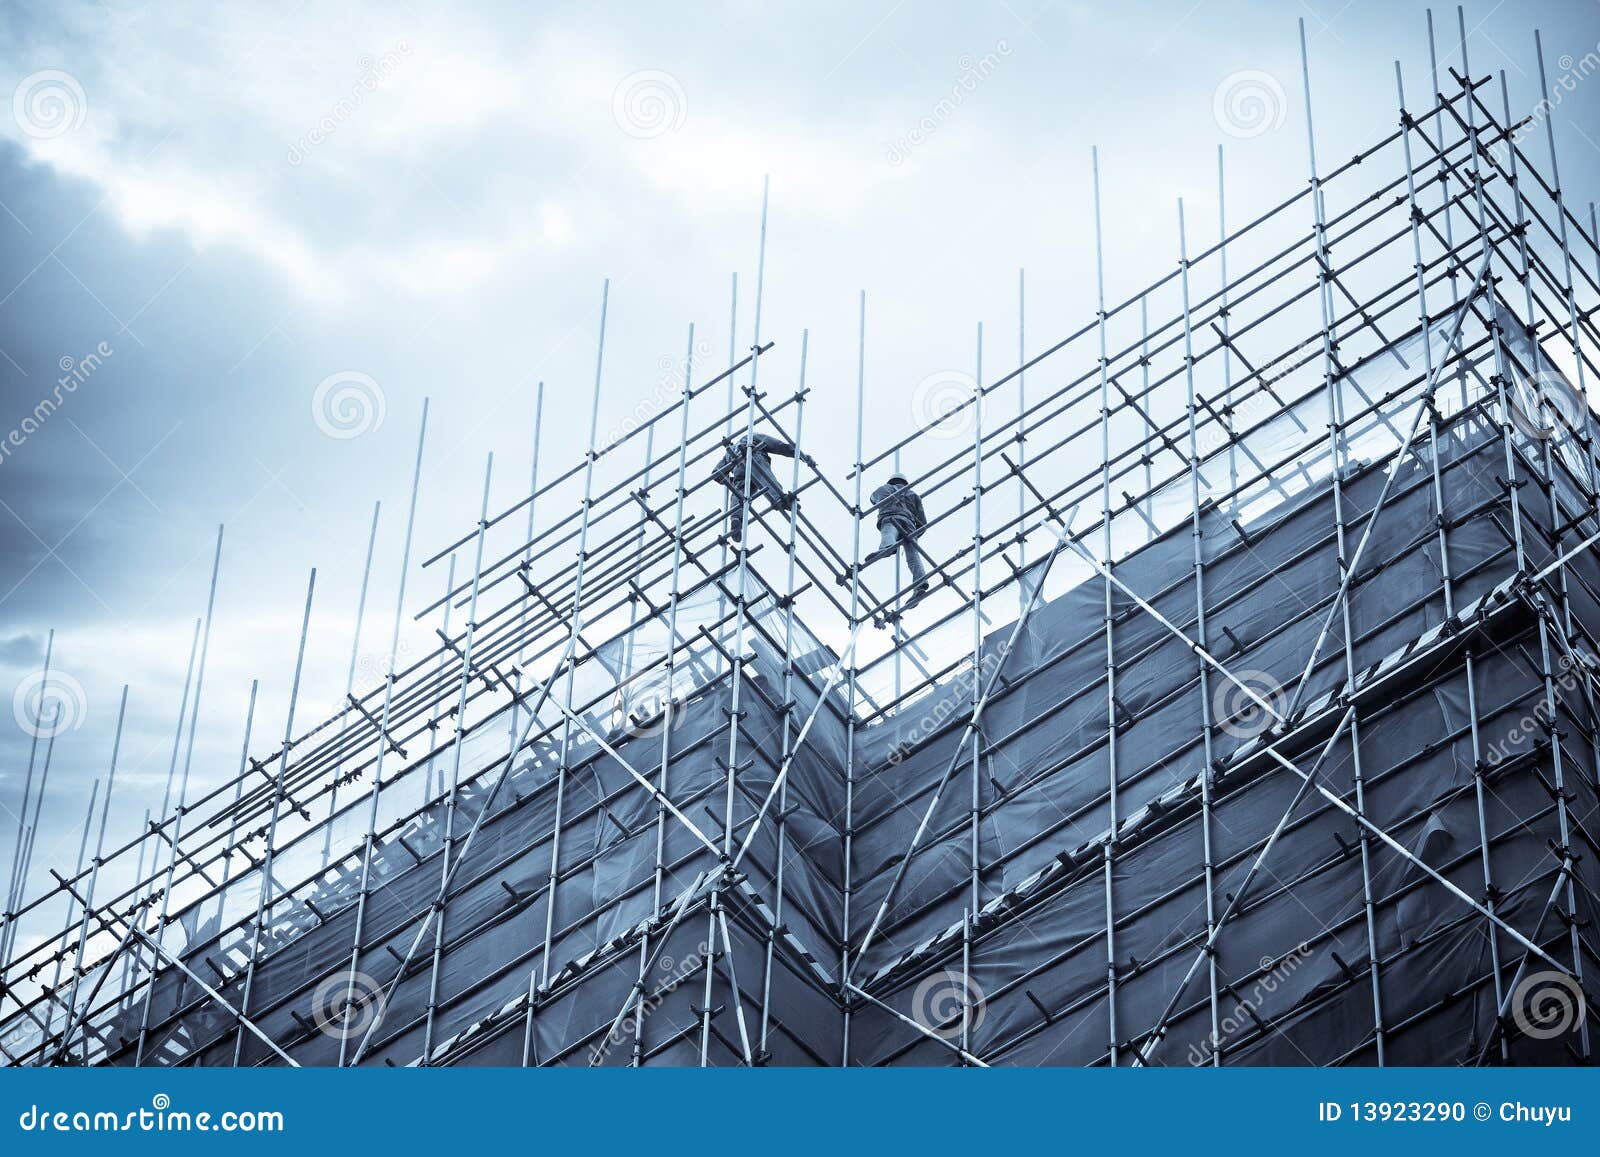 construction falsework and builder